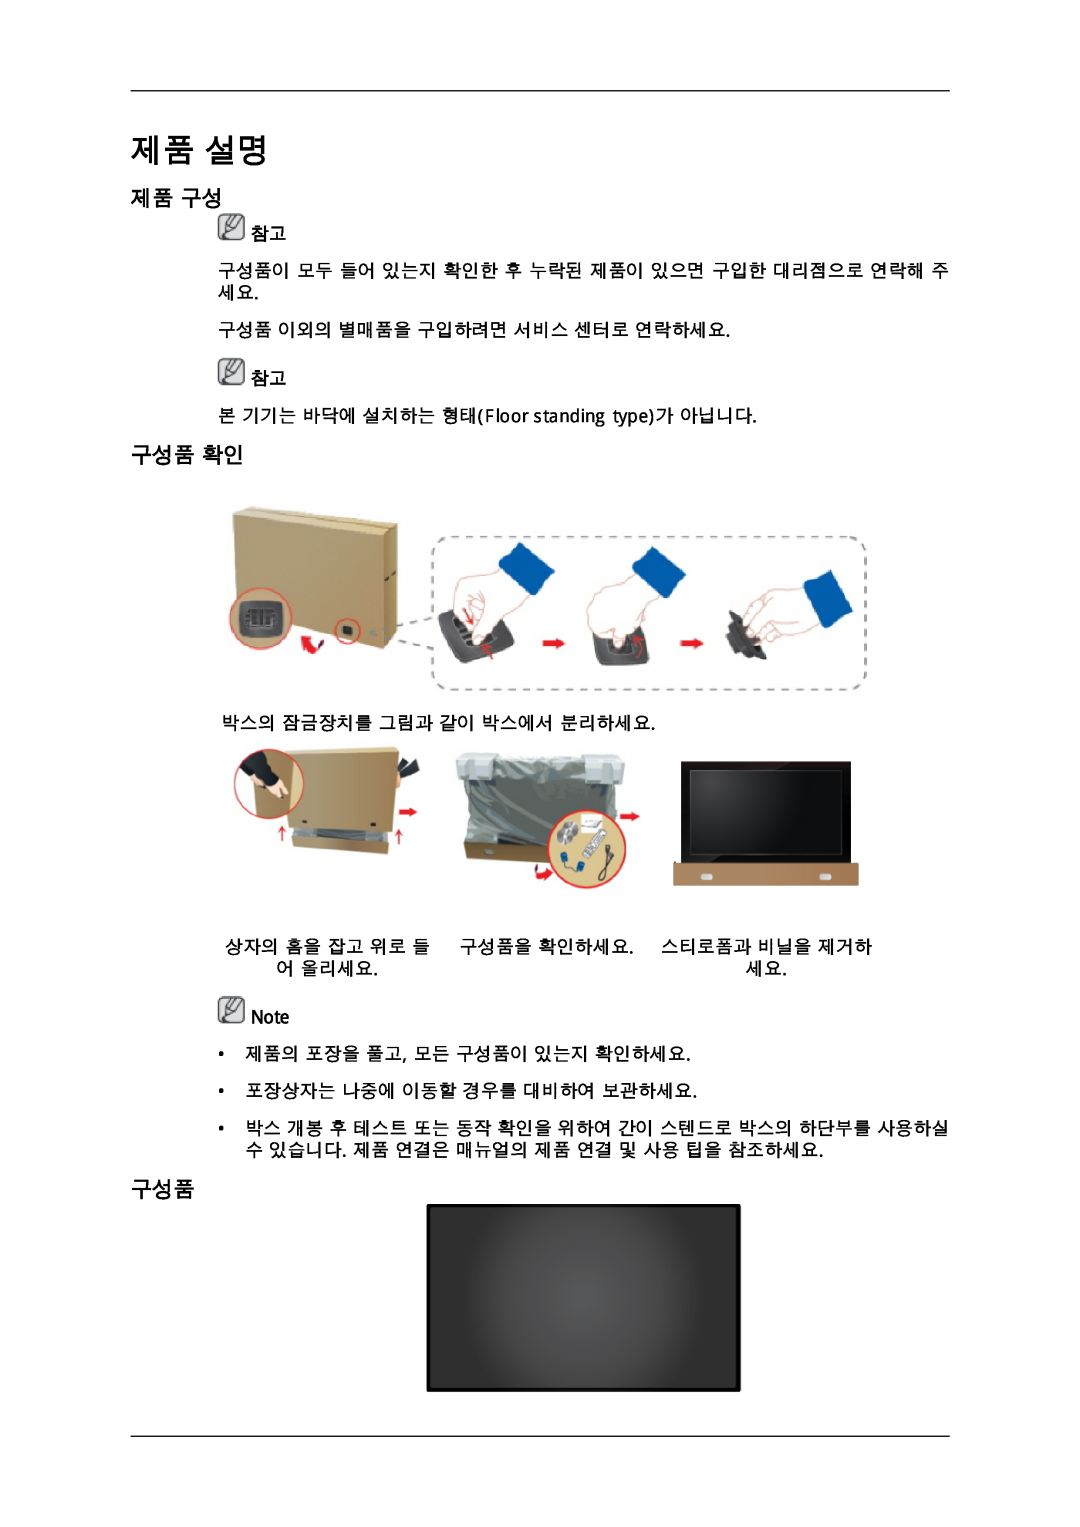 Samsung 725D quick start 제품 설명, 제품 구성, 구성품 확인 